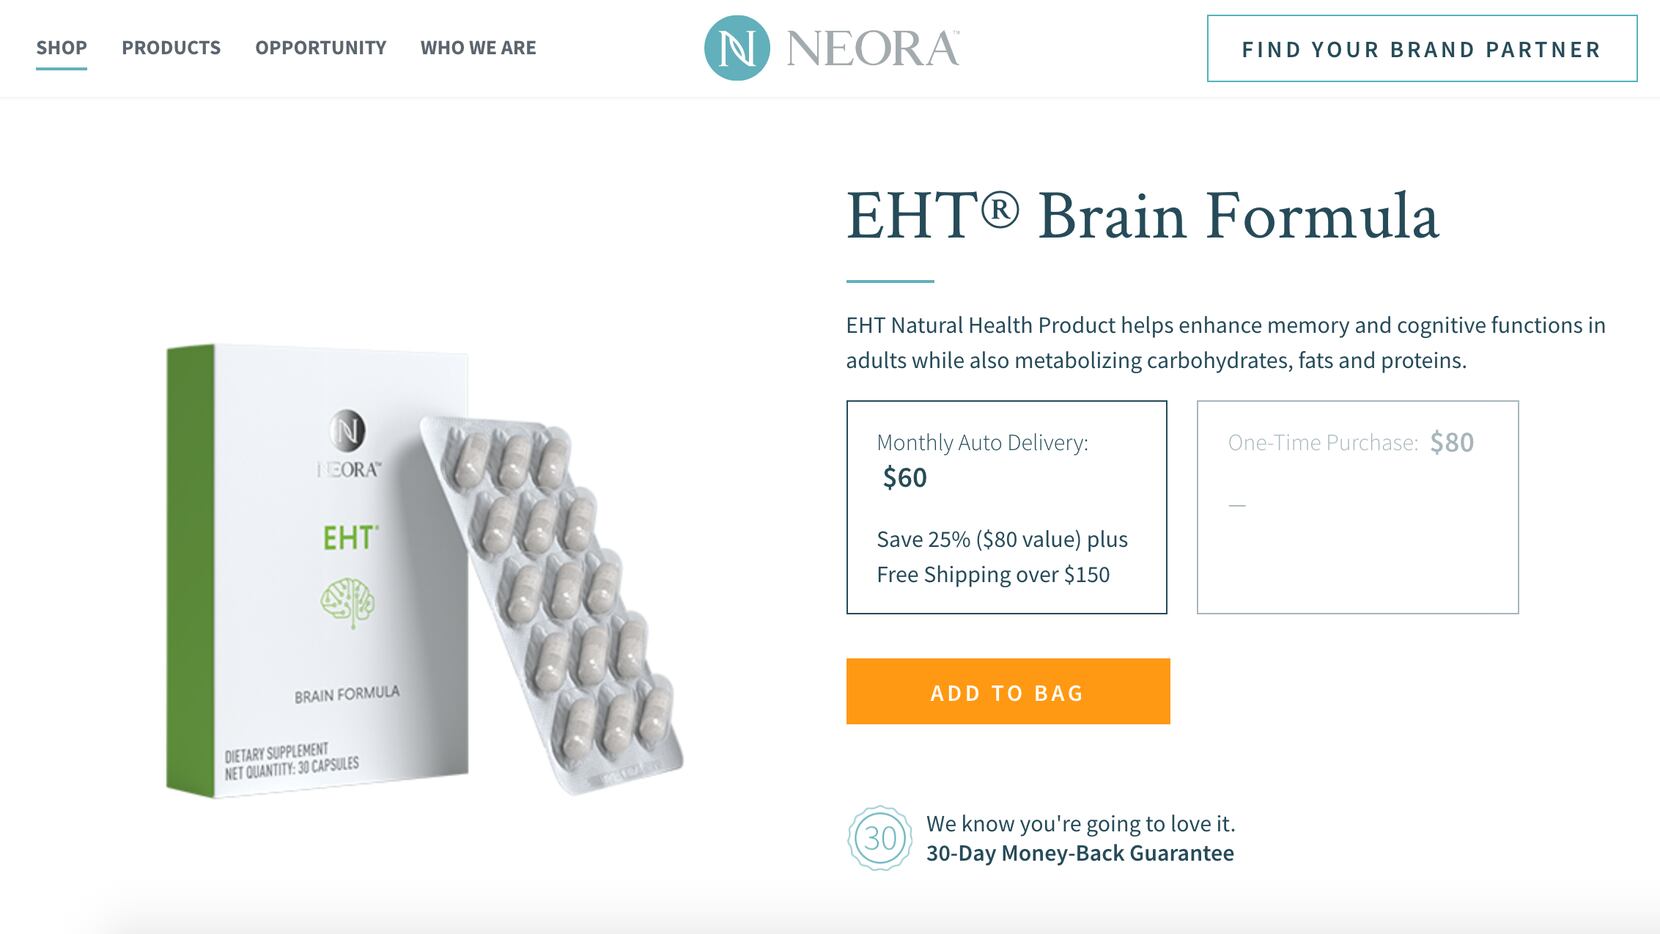 Neora's "EHT" Brain Formula supplement as advertised on its website Friday Nov. 1, 2019.